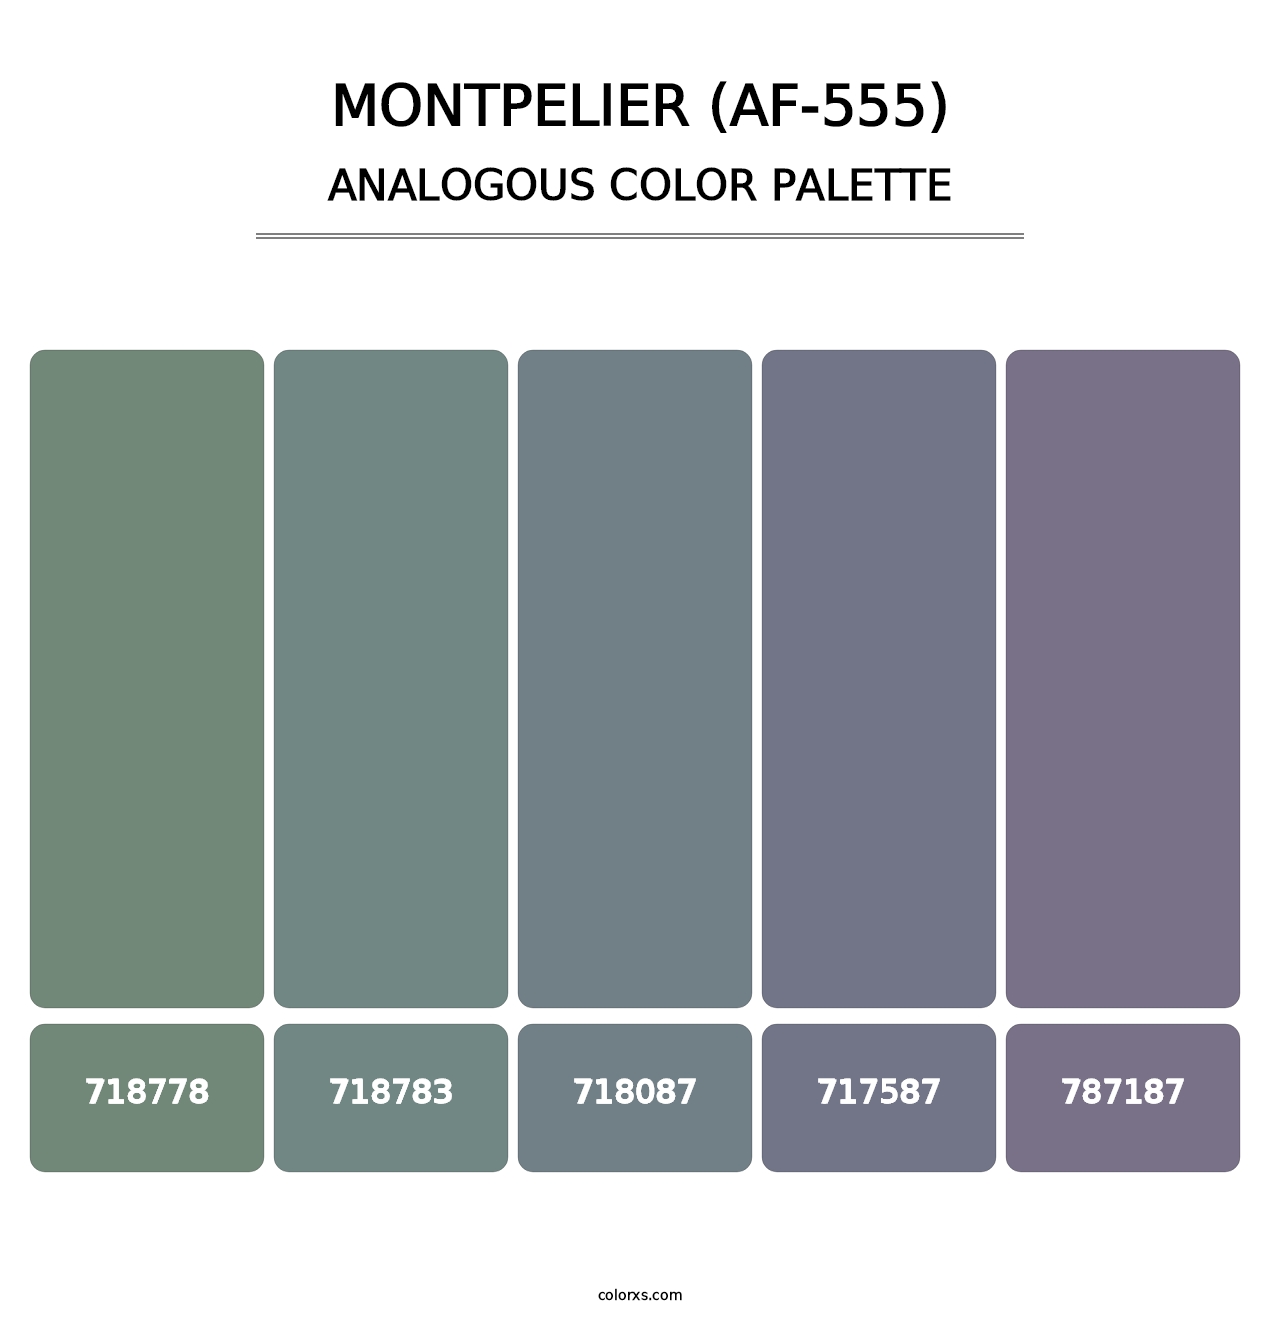 Montpelier (AF-555) - Analogous Color Palette